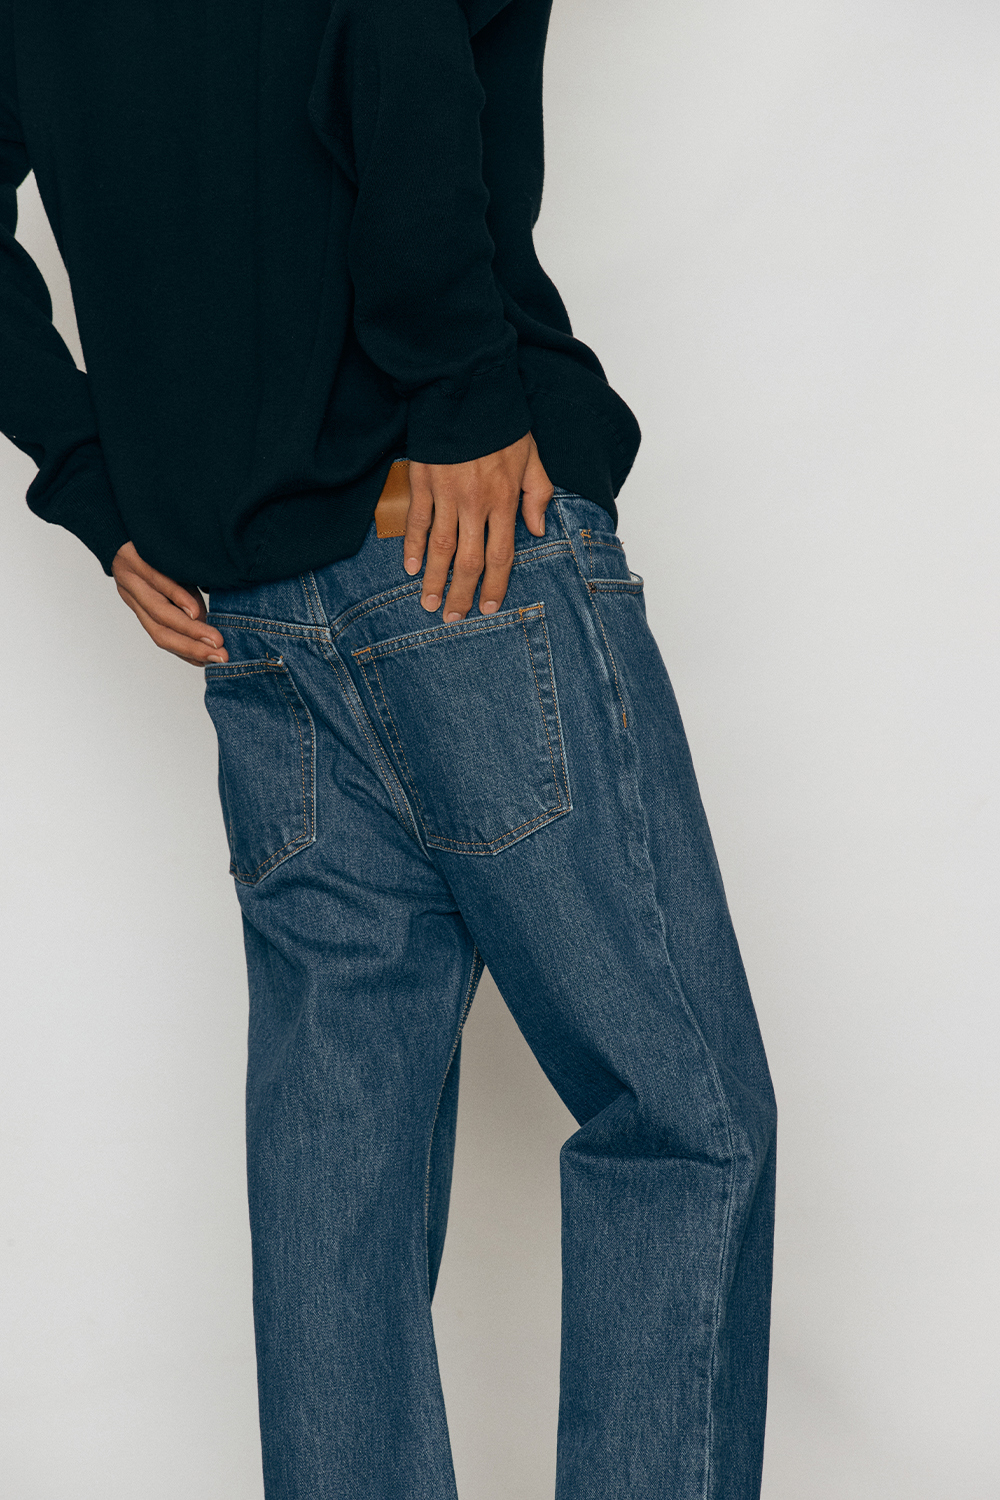 Pants model image-S1L11